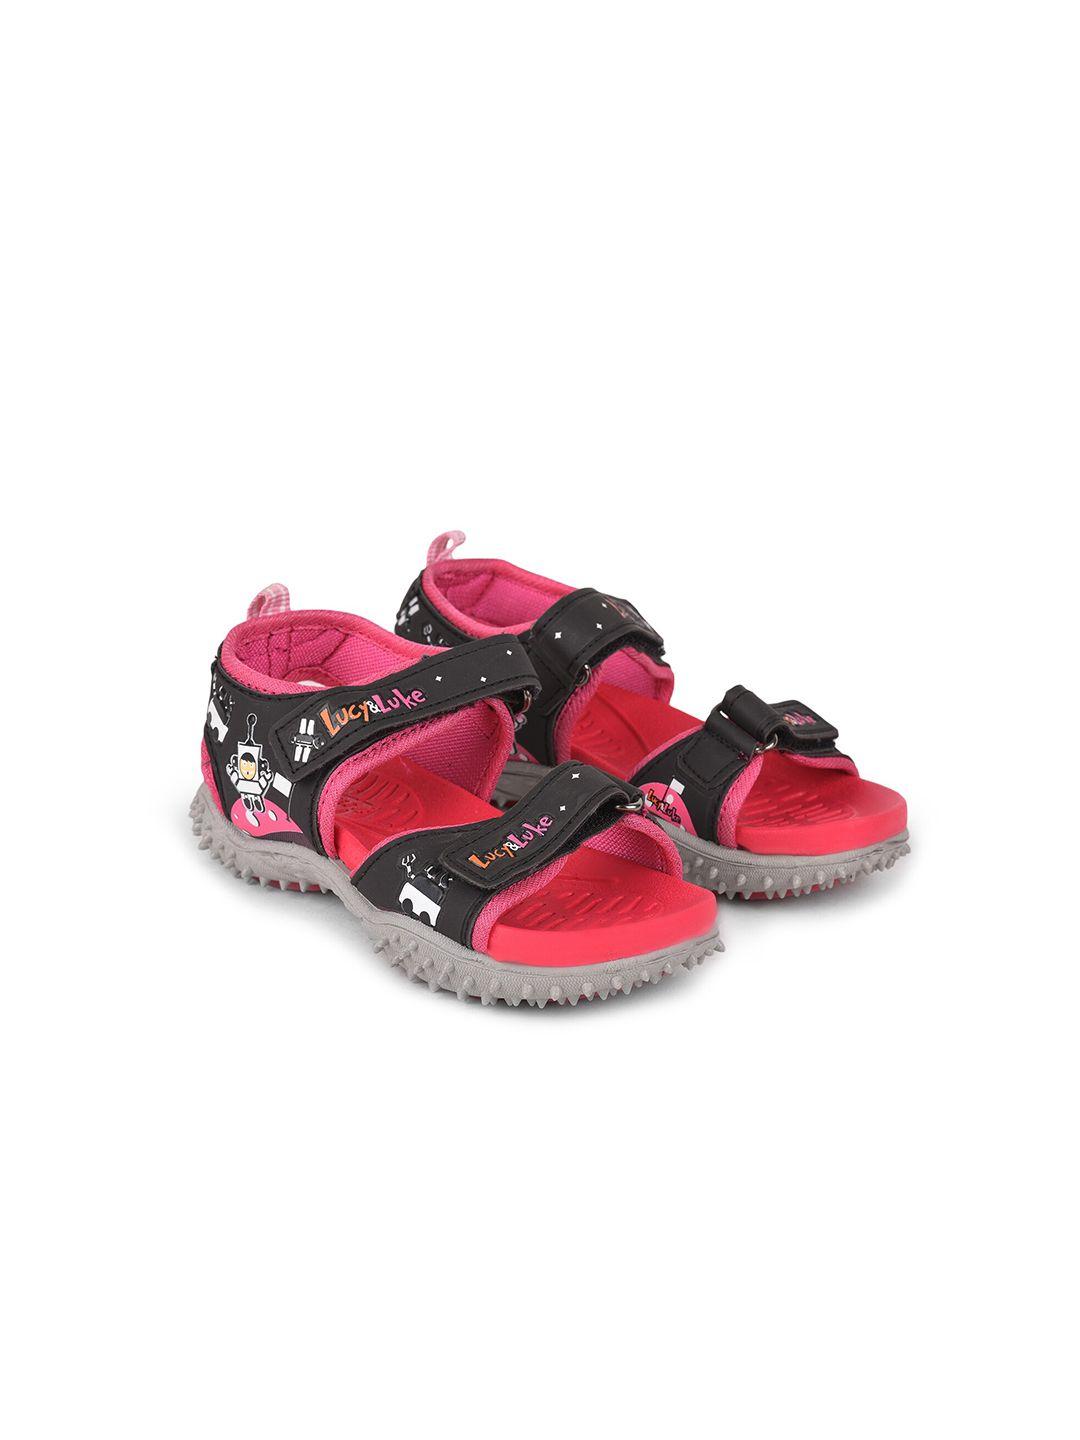 liberty-kids-pink-&-black-printed-sports-sandals